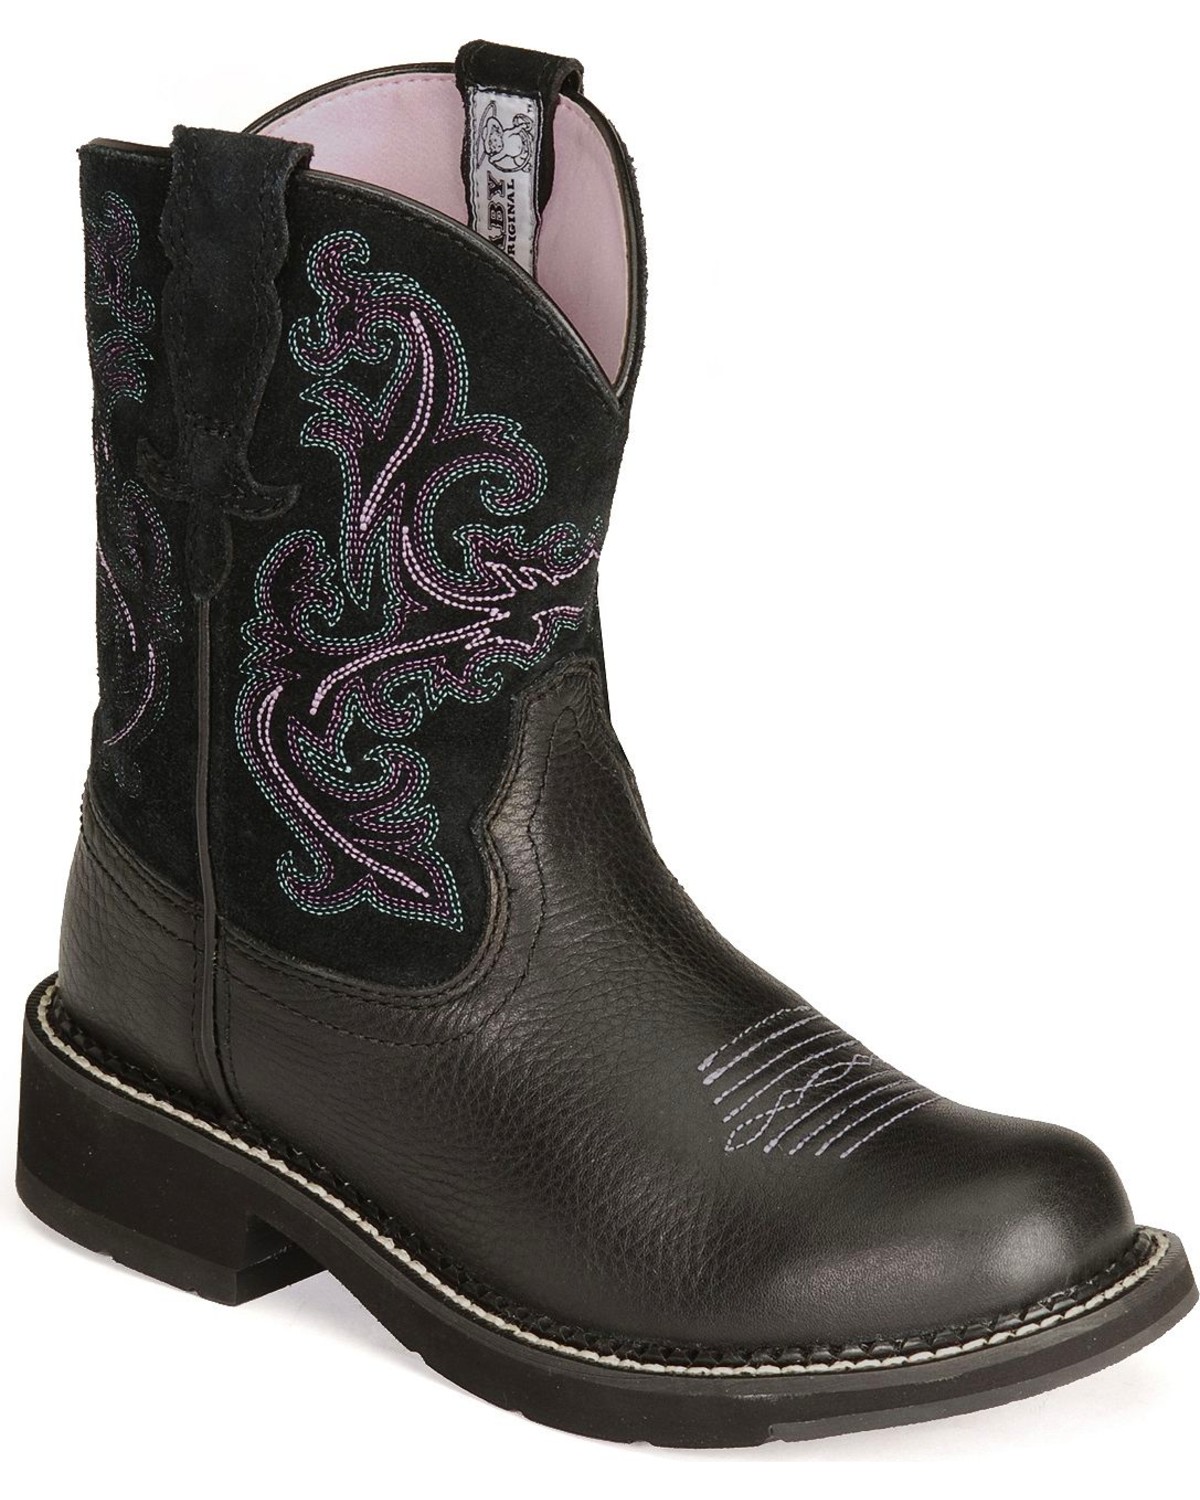 Ariat Women's Fatbaby Deertan Western Boots - Round Toe